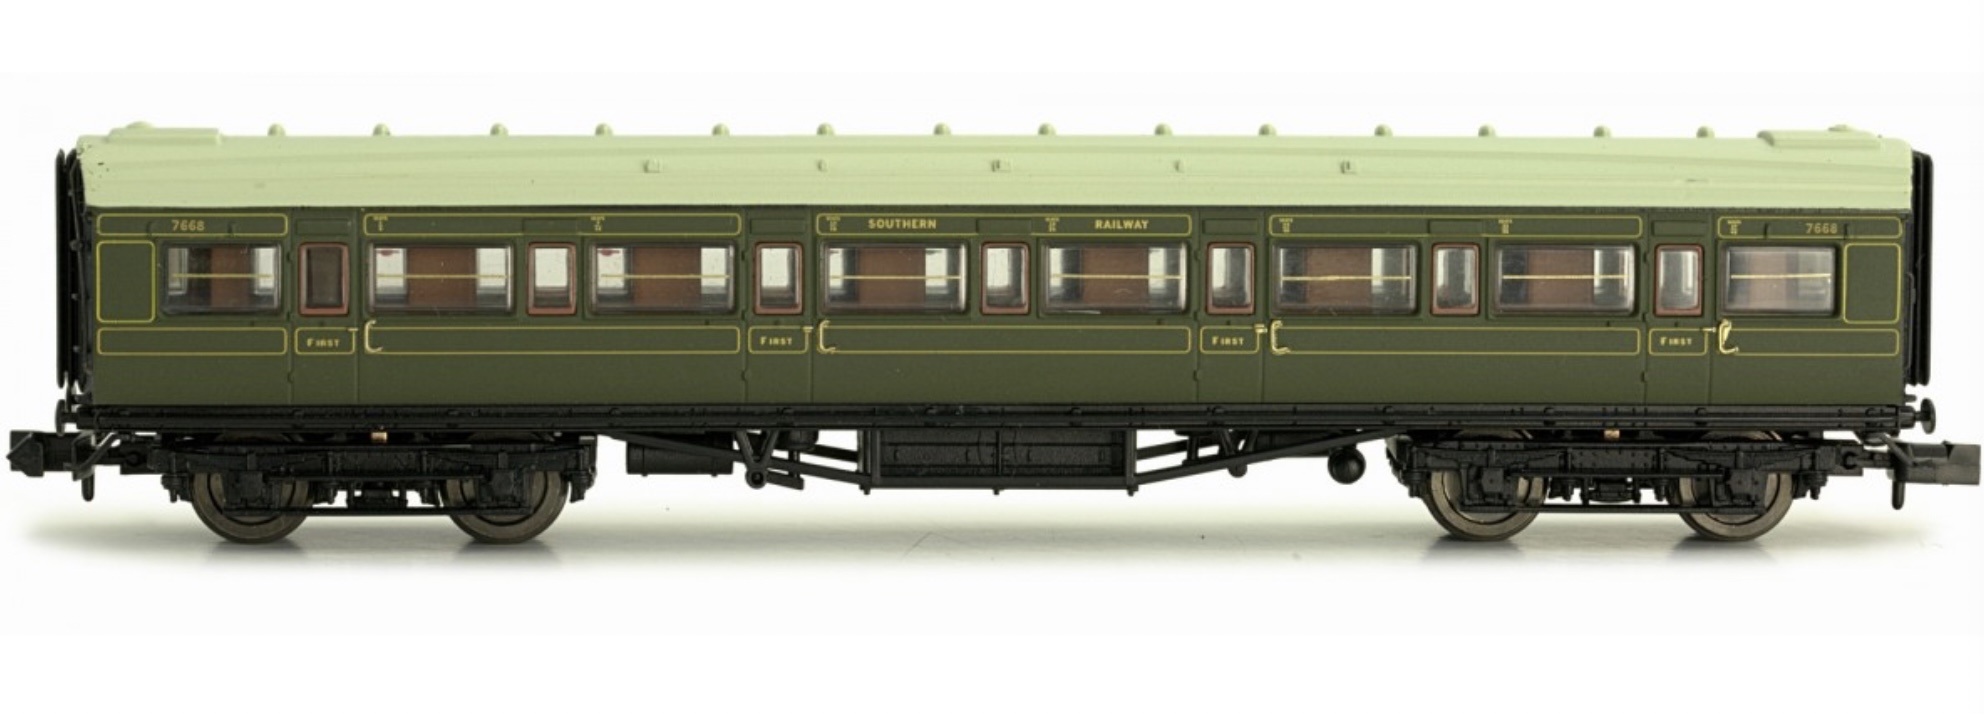 N Scale - Dapol - 2P-012-003 - Passenger Car, Coach, Maunsell, 1st Class - Southern (UK) - 7668